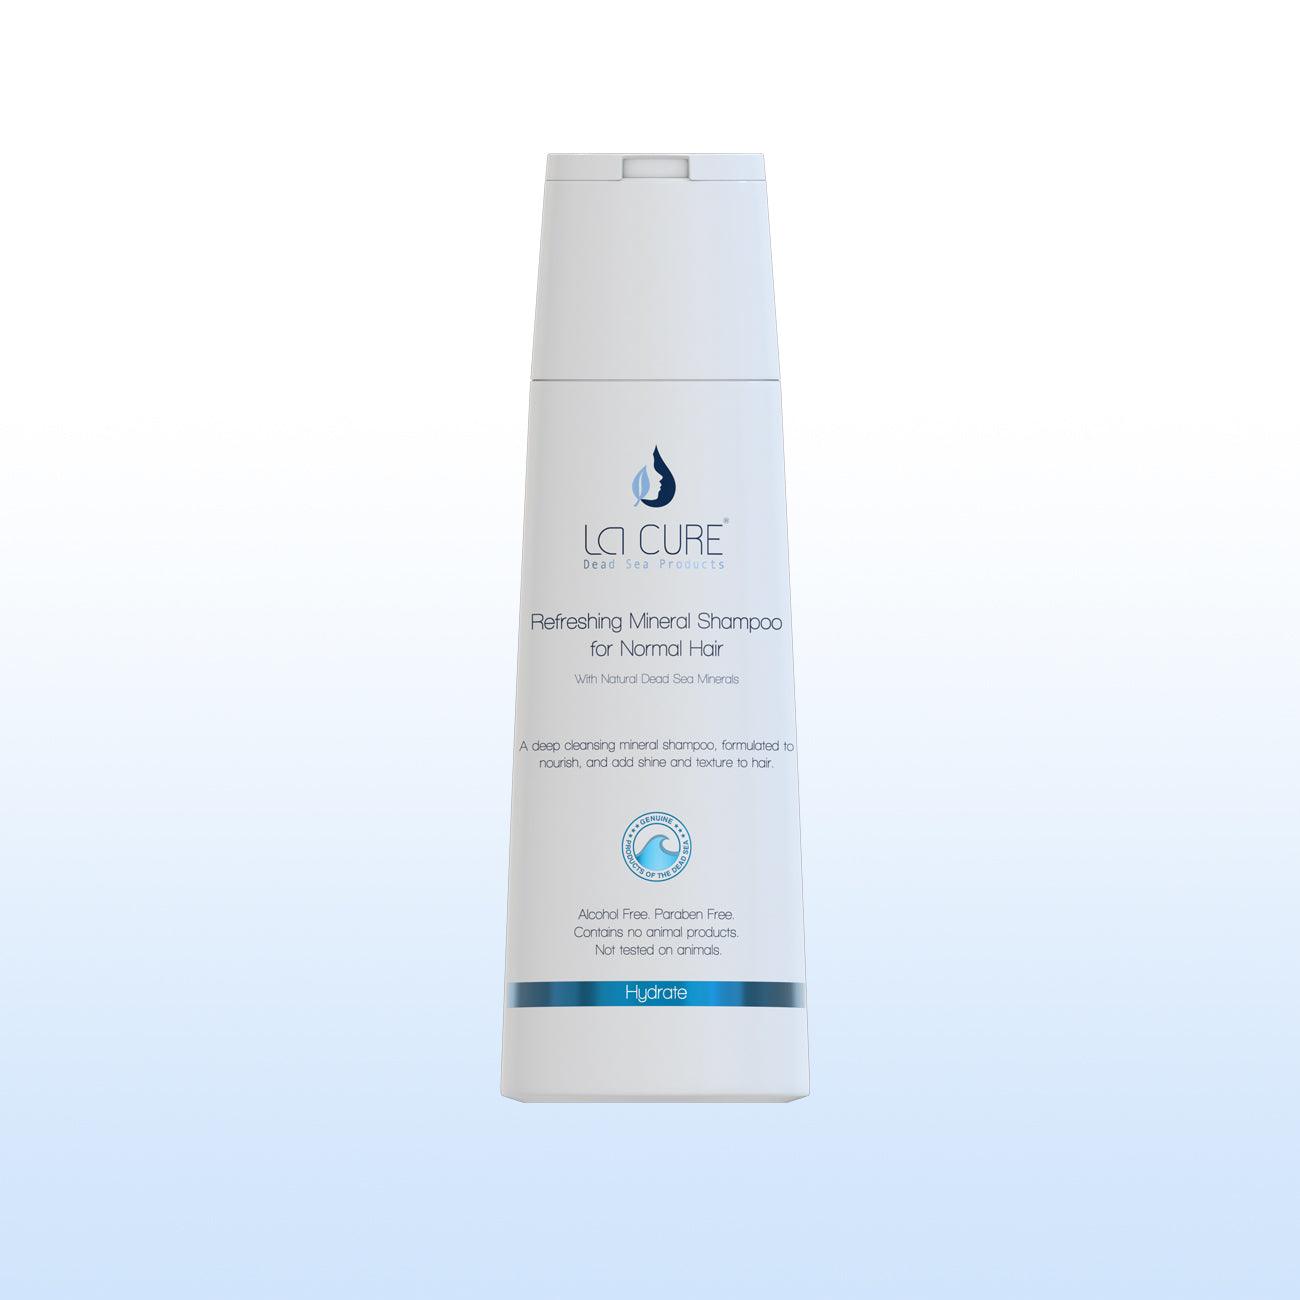 La Cure Refreshing Mineral Shampoo for Normal Hair 250 ml - Mrayti Store